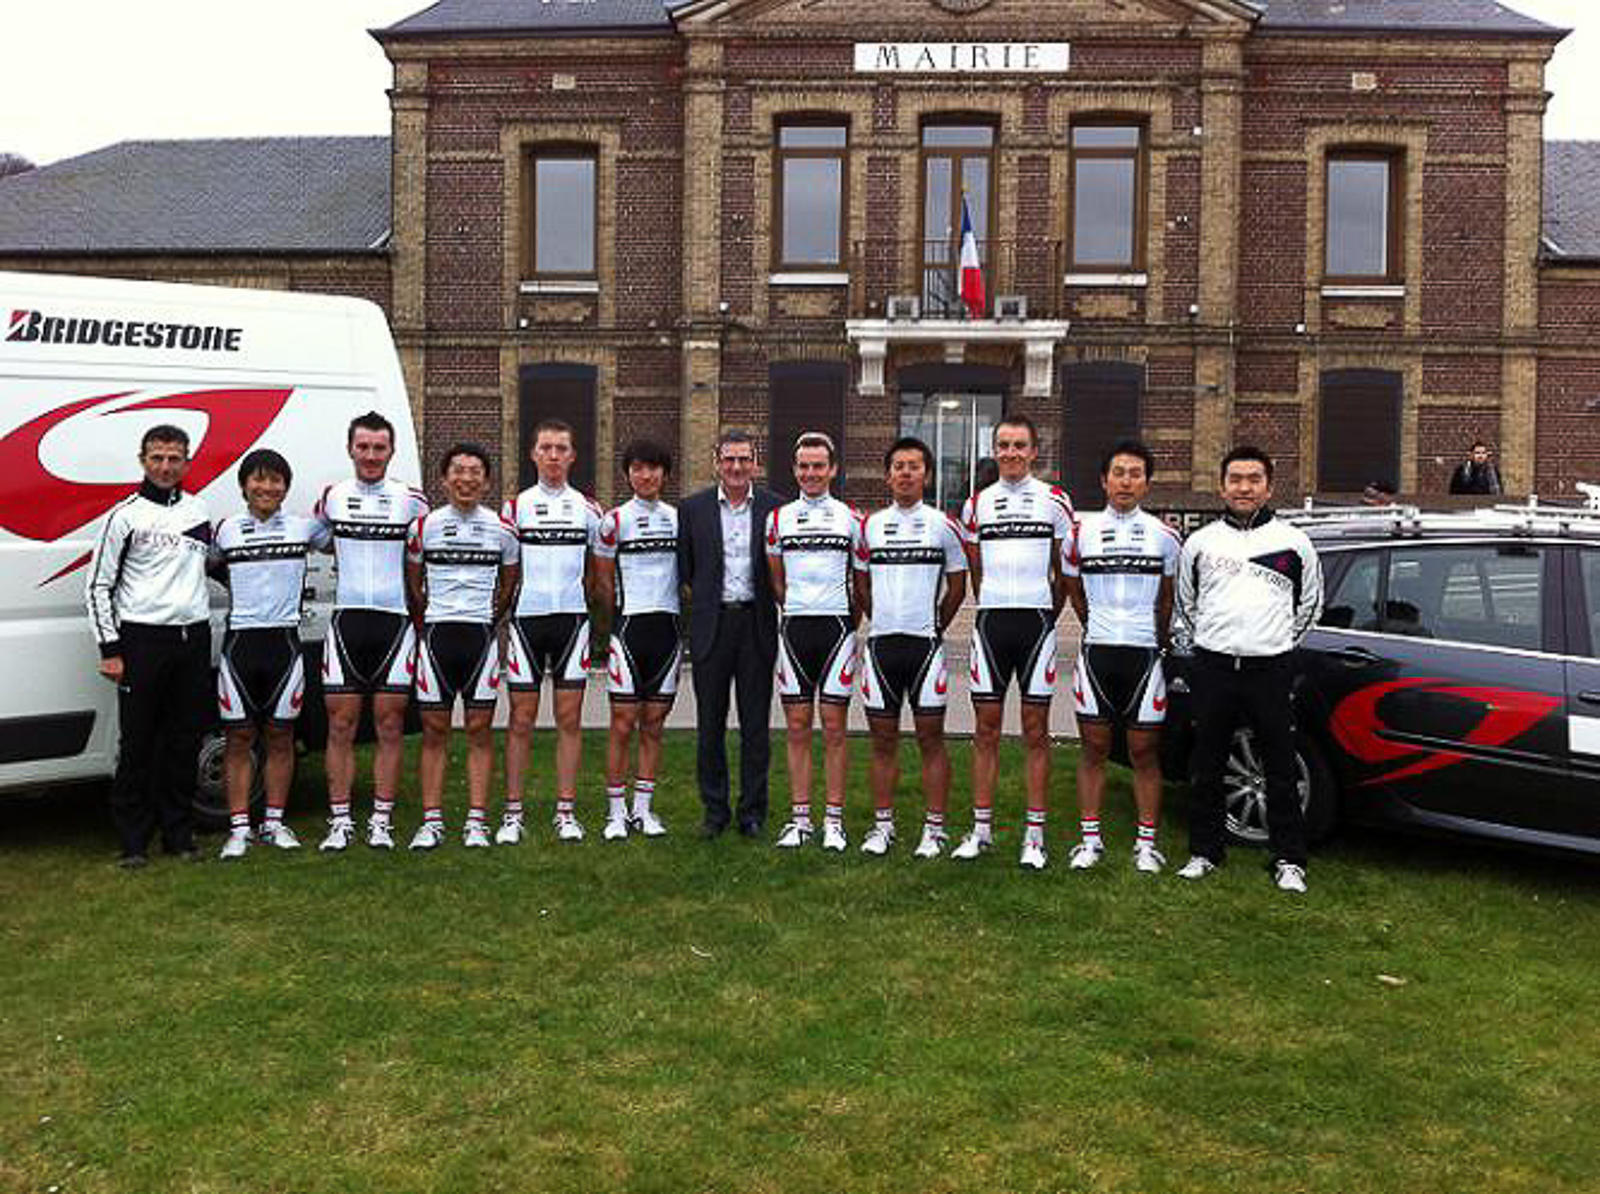 《BRIDGESTONE Anchor Cycling Team》<br>ブリヂストン アンカー サイクリングチーム